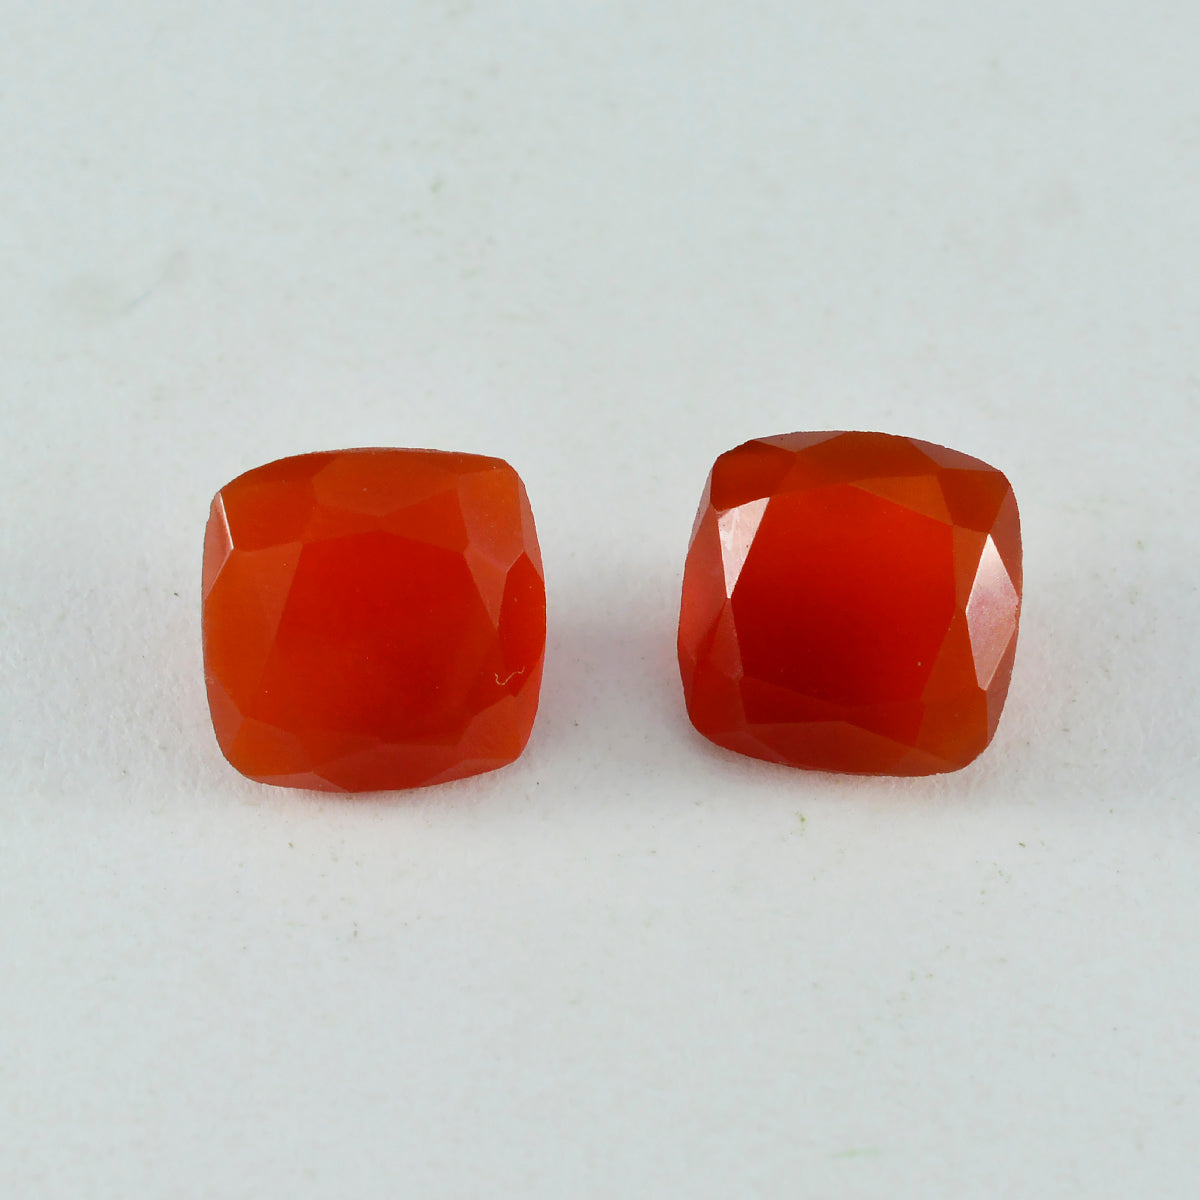 Riyogems 1PC Natural Red Onyx Faceted 8x8 mm Cushion Shape pretty Quality Gems